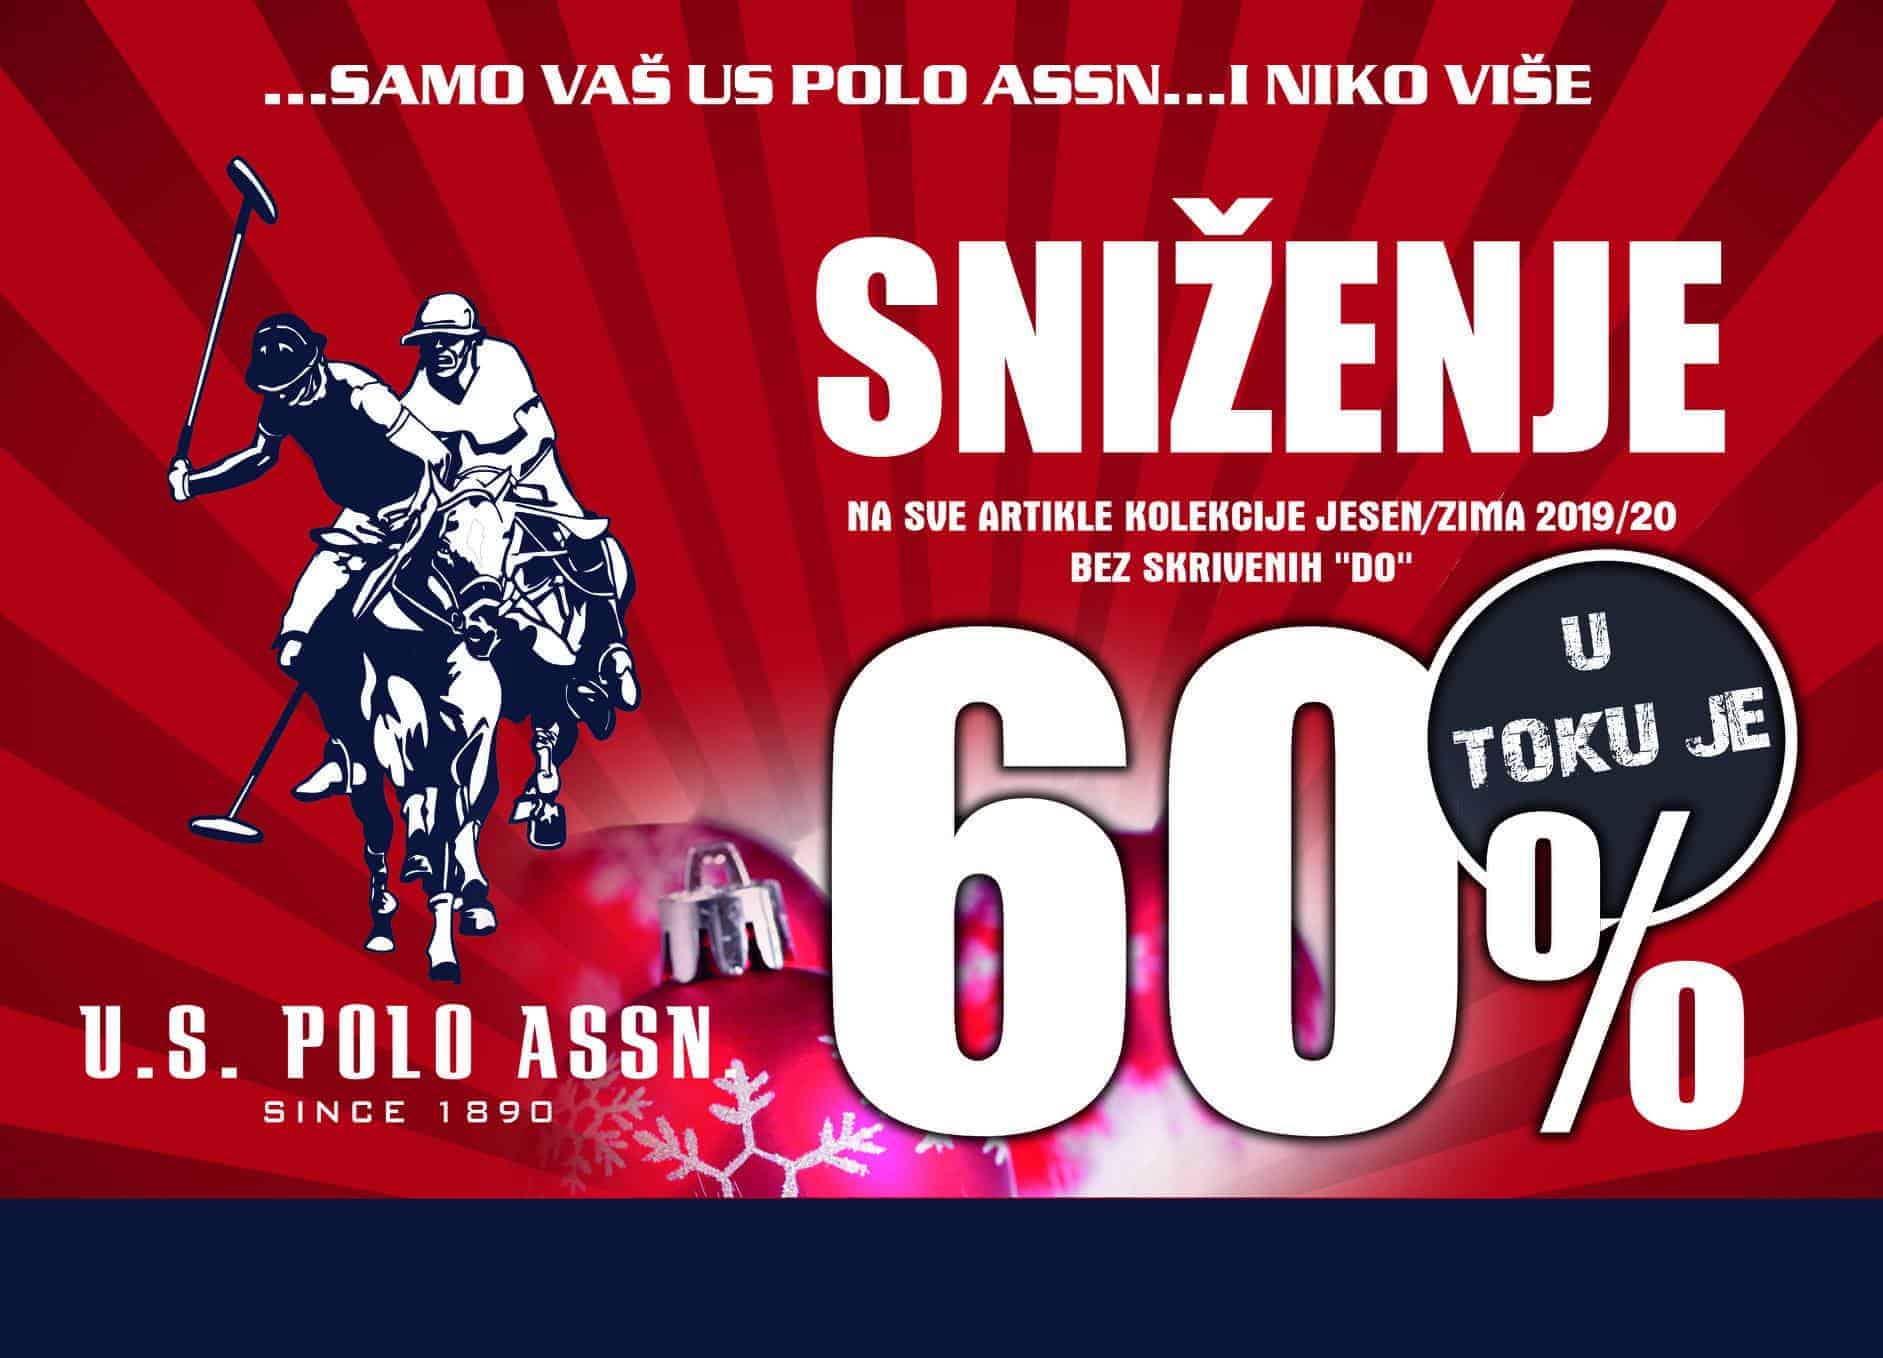 Za sve ljubitelje američkog brenda U.S. Polo Assn Bosniau toku je sezonsko sniženje od 60 posto na sve artikle, 